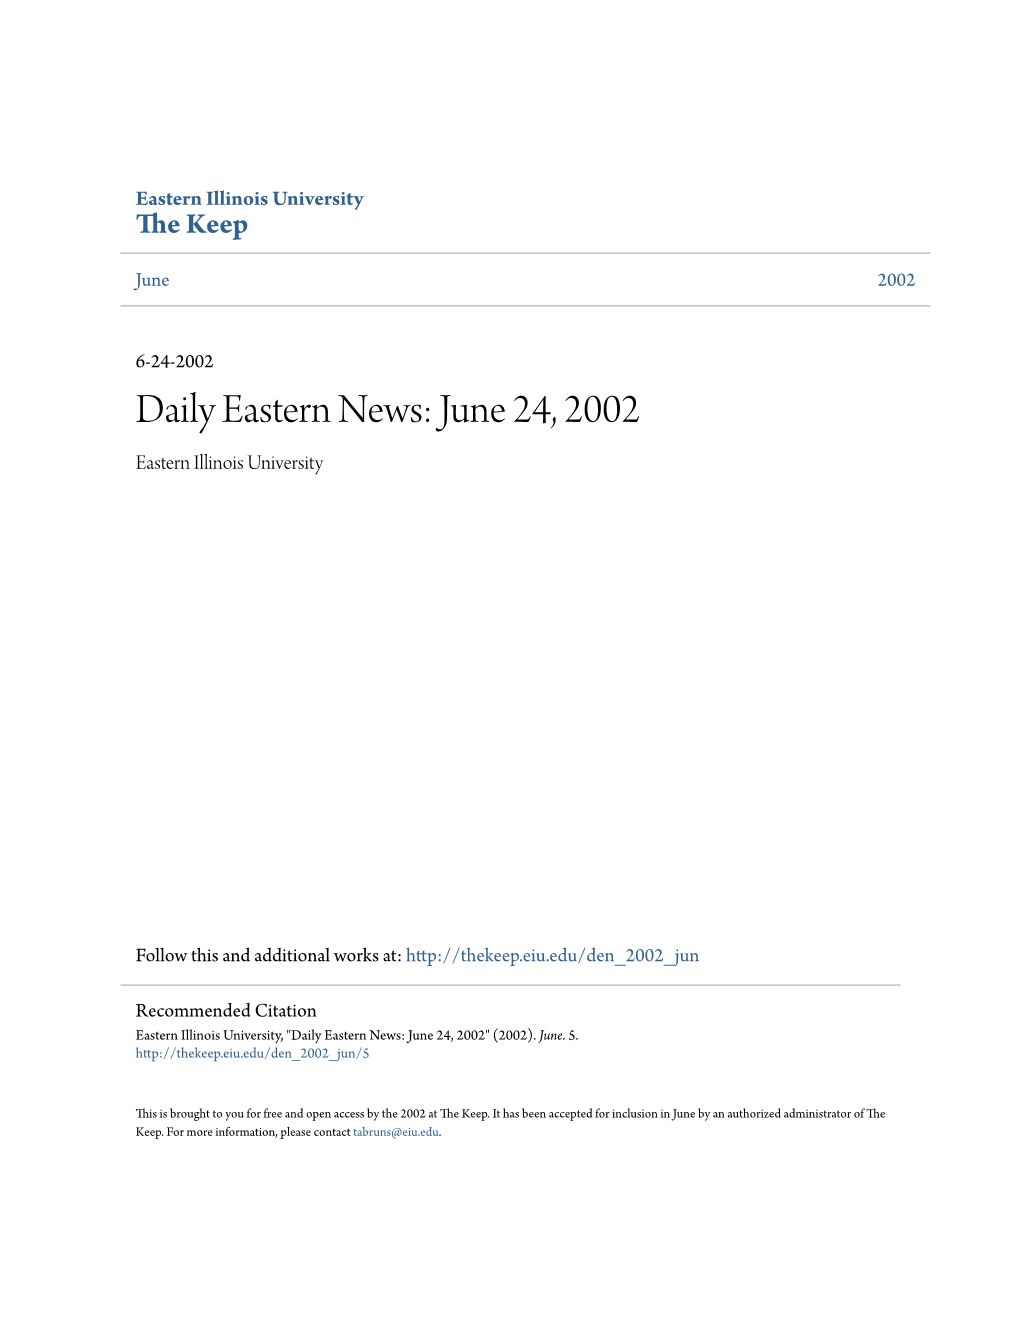 Daily Eastern News: June 24, 2002 Eastern Illinois University